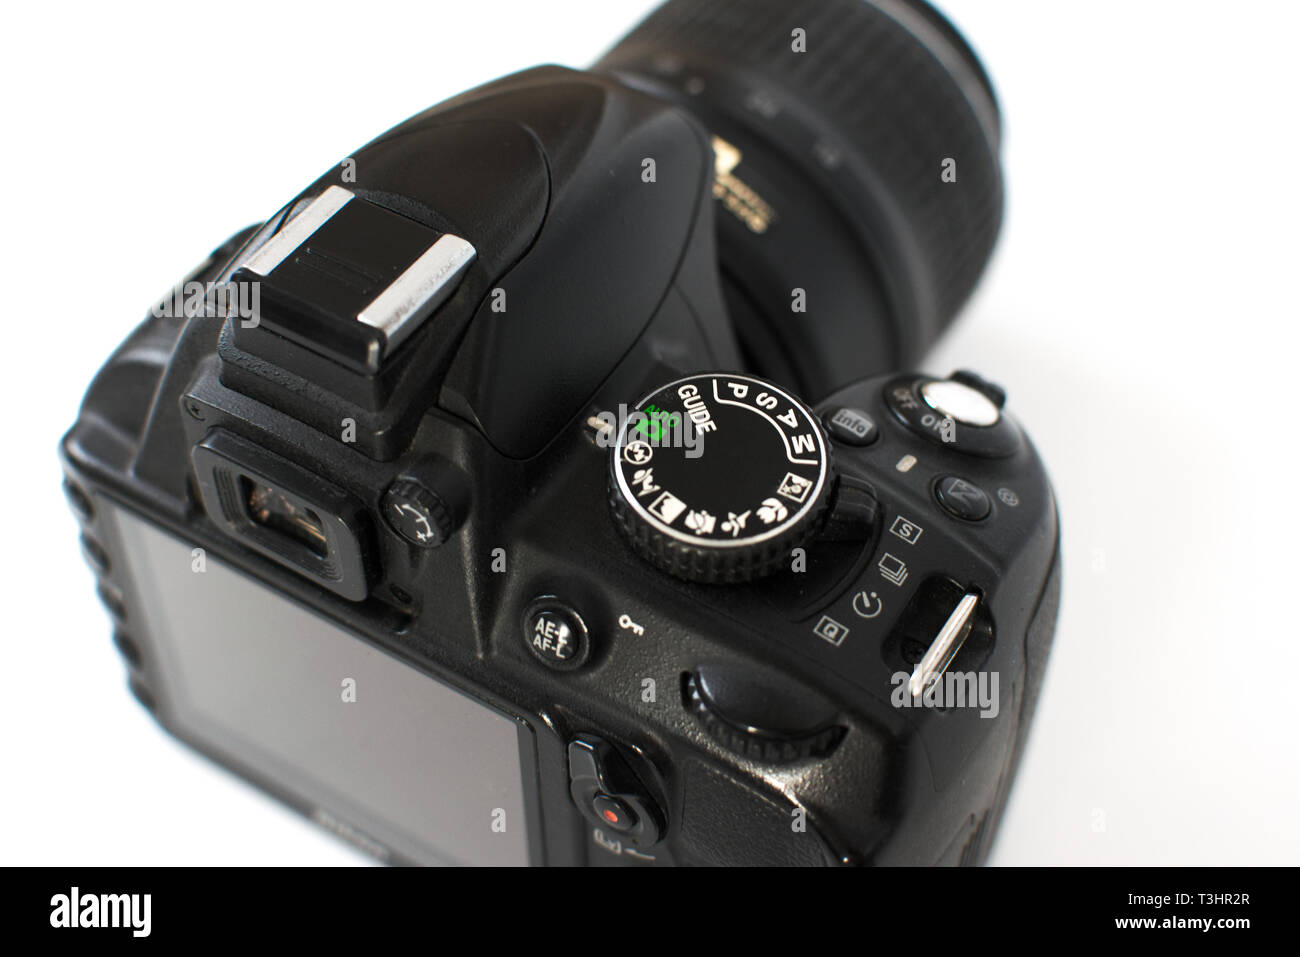 Nikon d3100 hi-res stock photography and images - Alamy